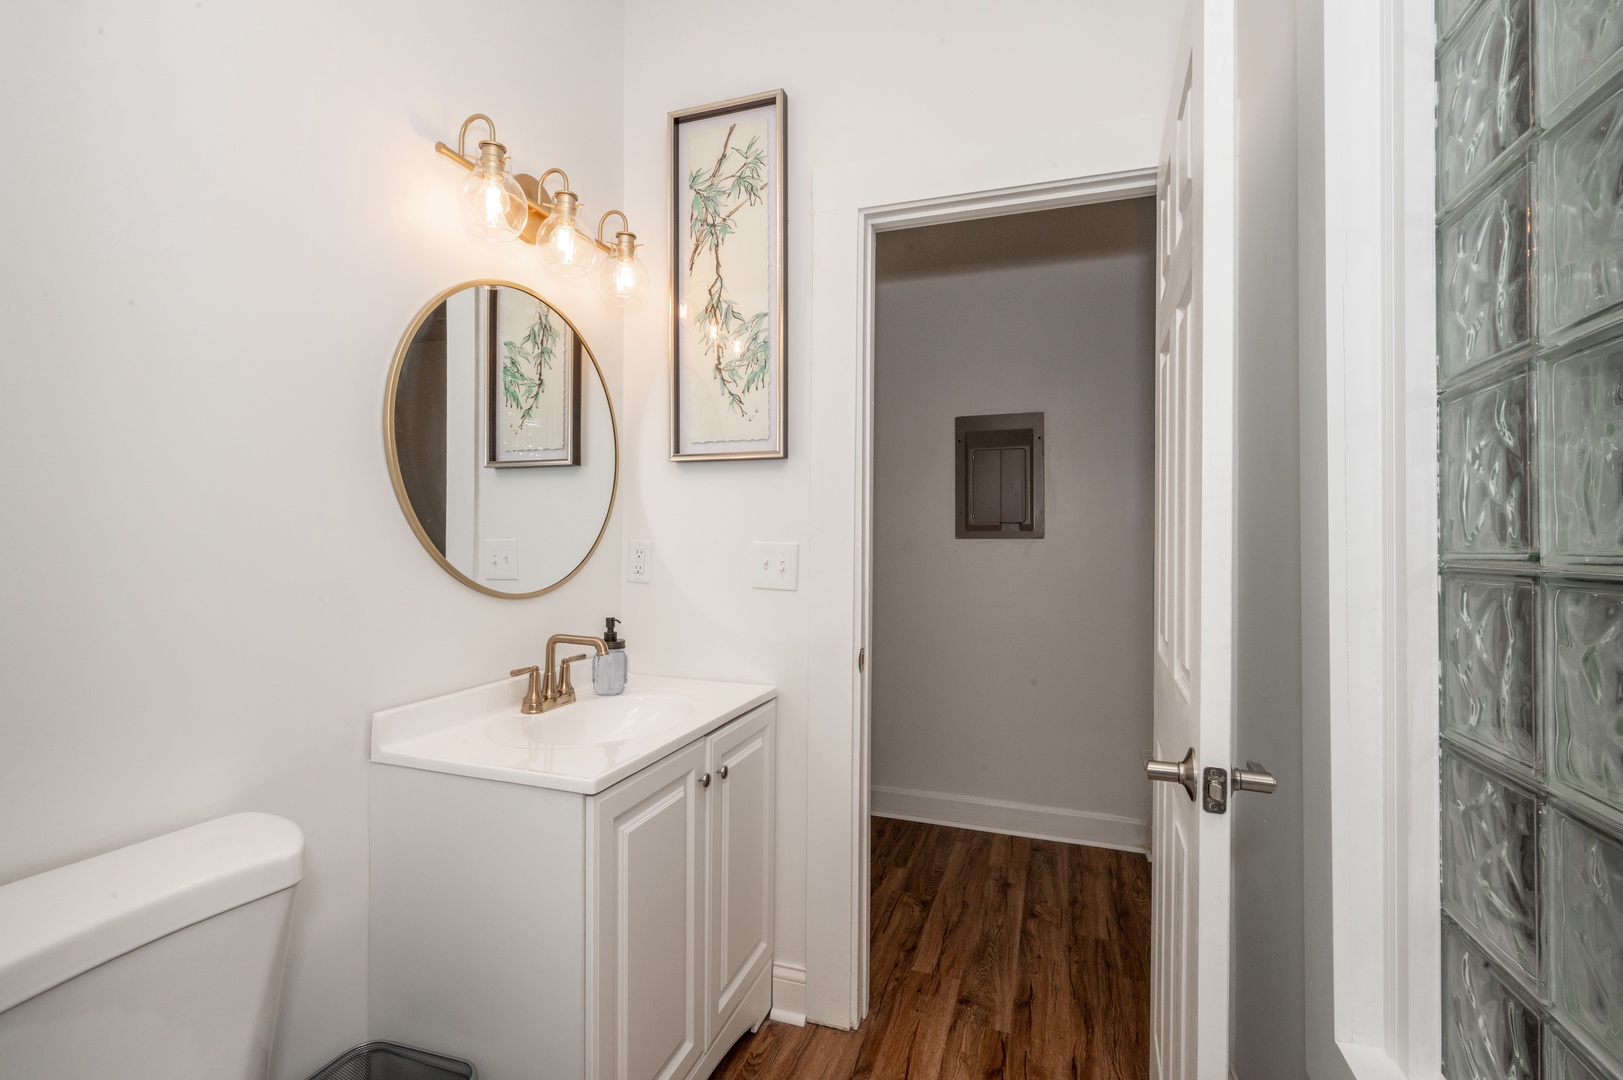 Unit 3: Ultra-stylish bathroom with single vanity & glass shower